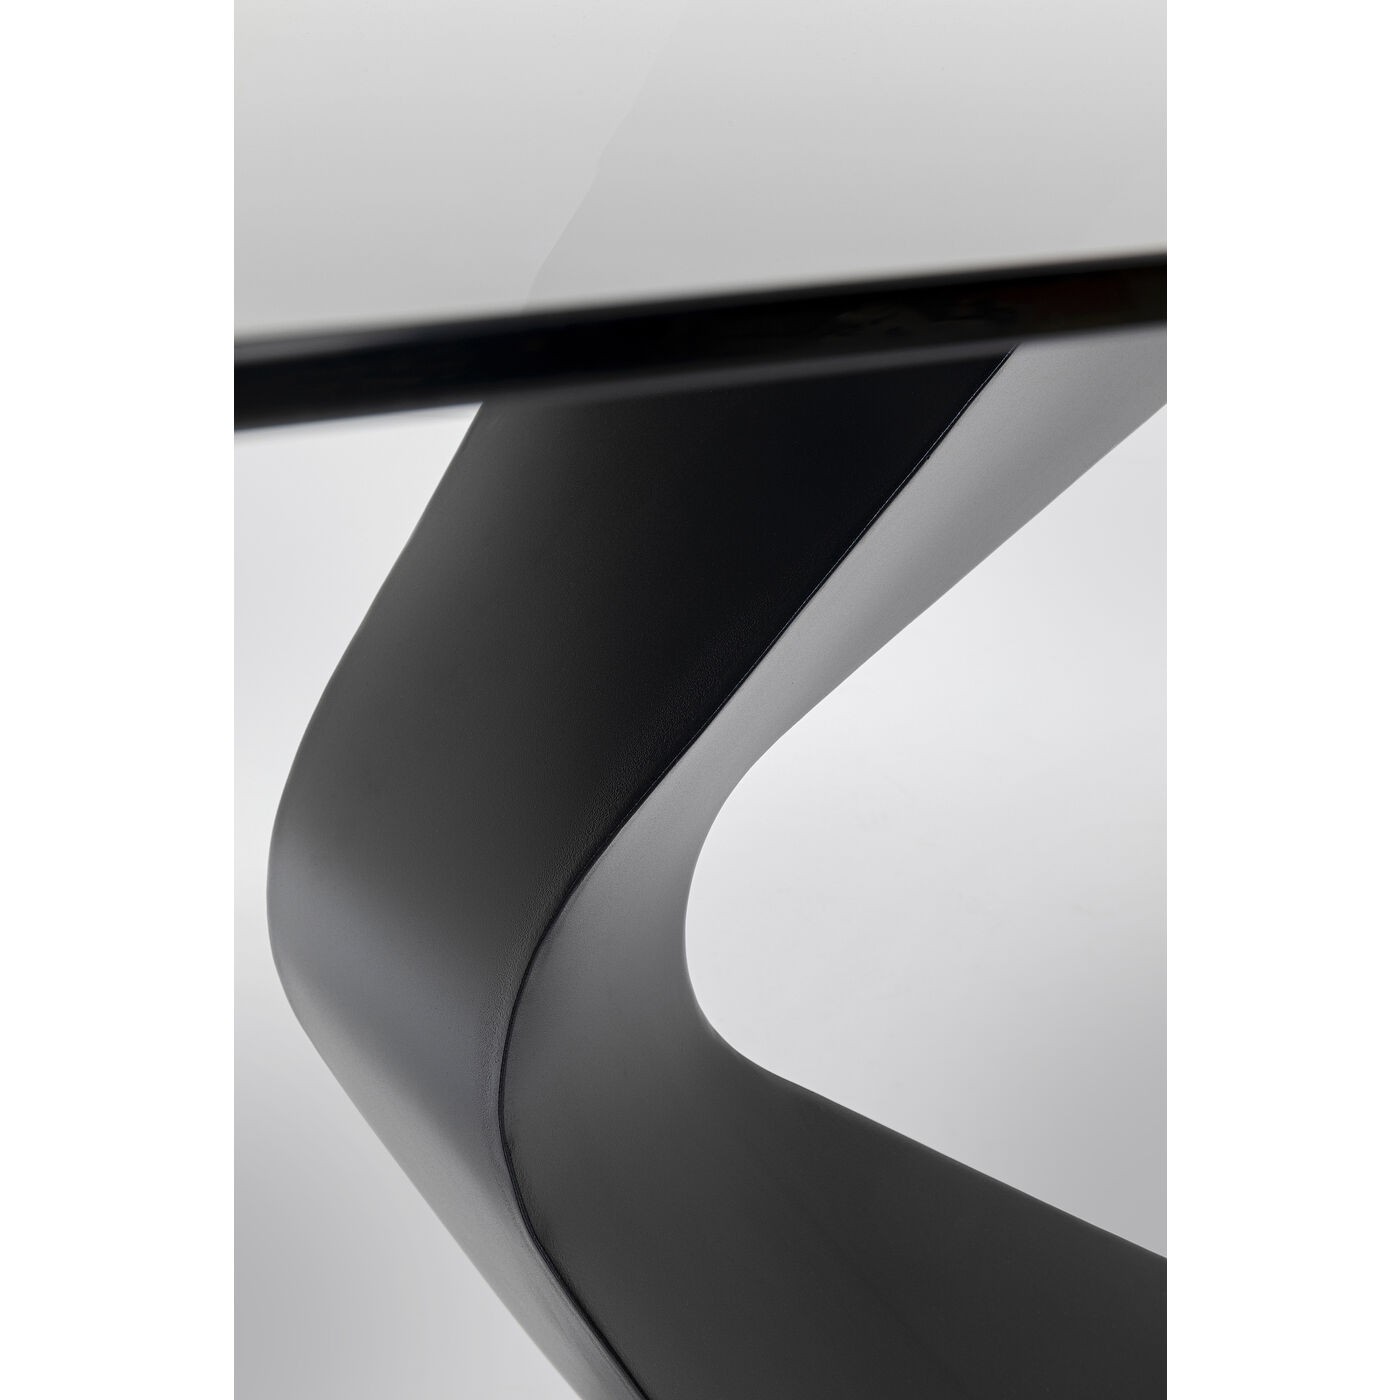 Table Gloria 200x100cm noire Kare Design